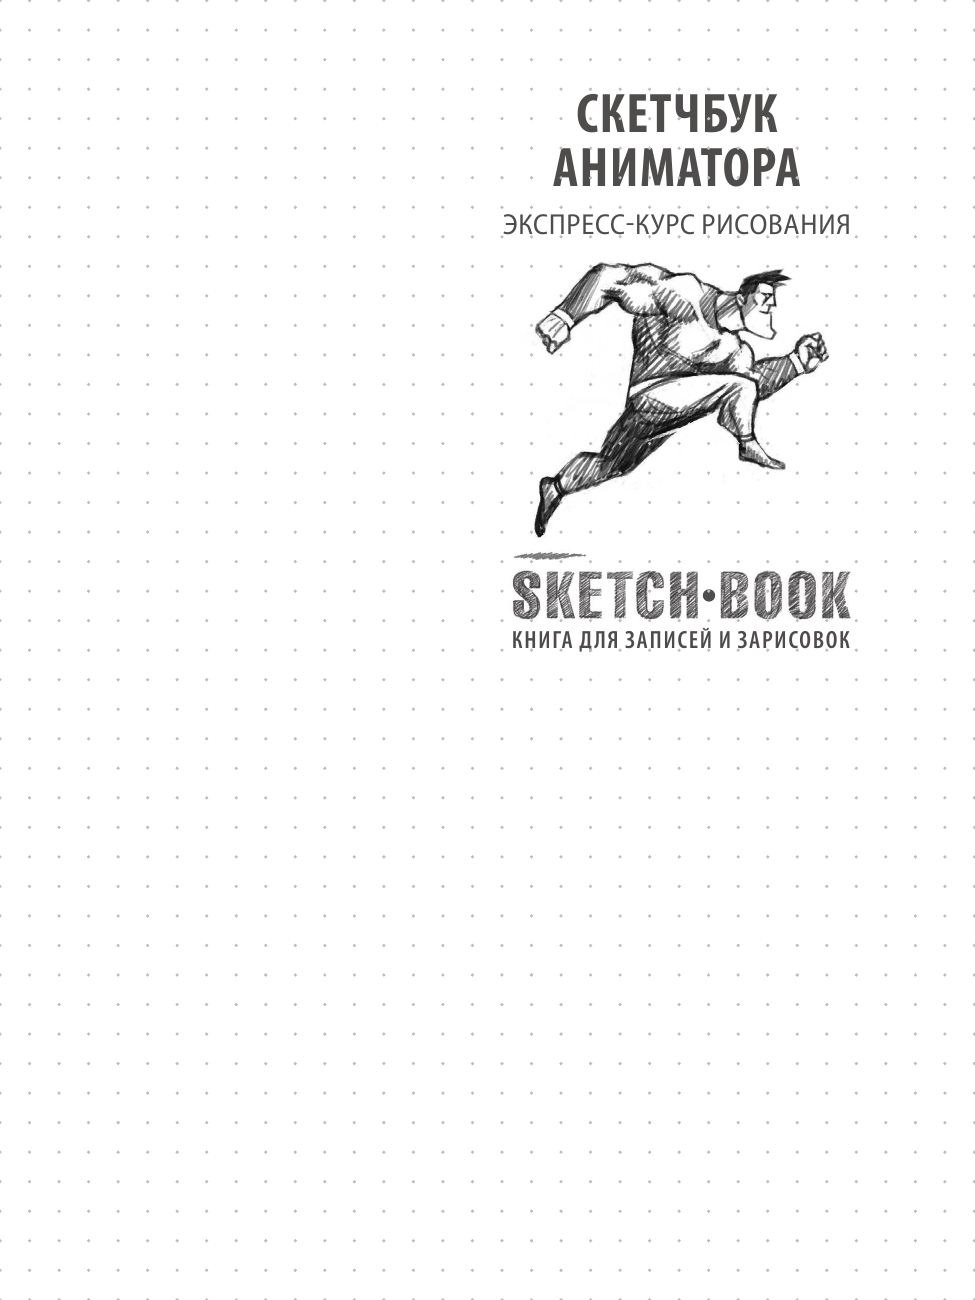 Sketchbook. Скетчбук аниматора - фото №6